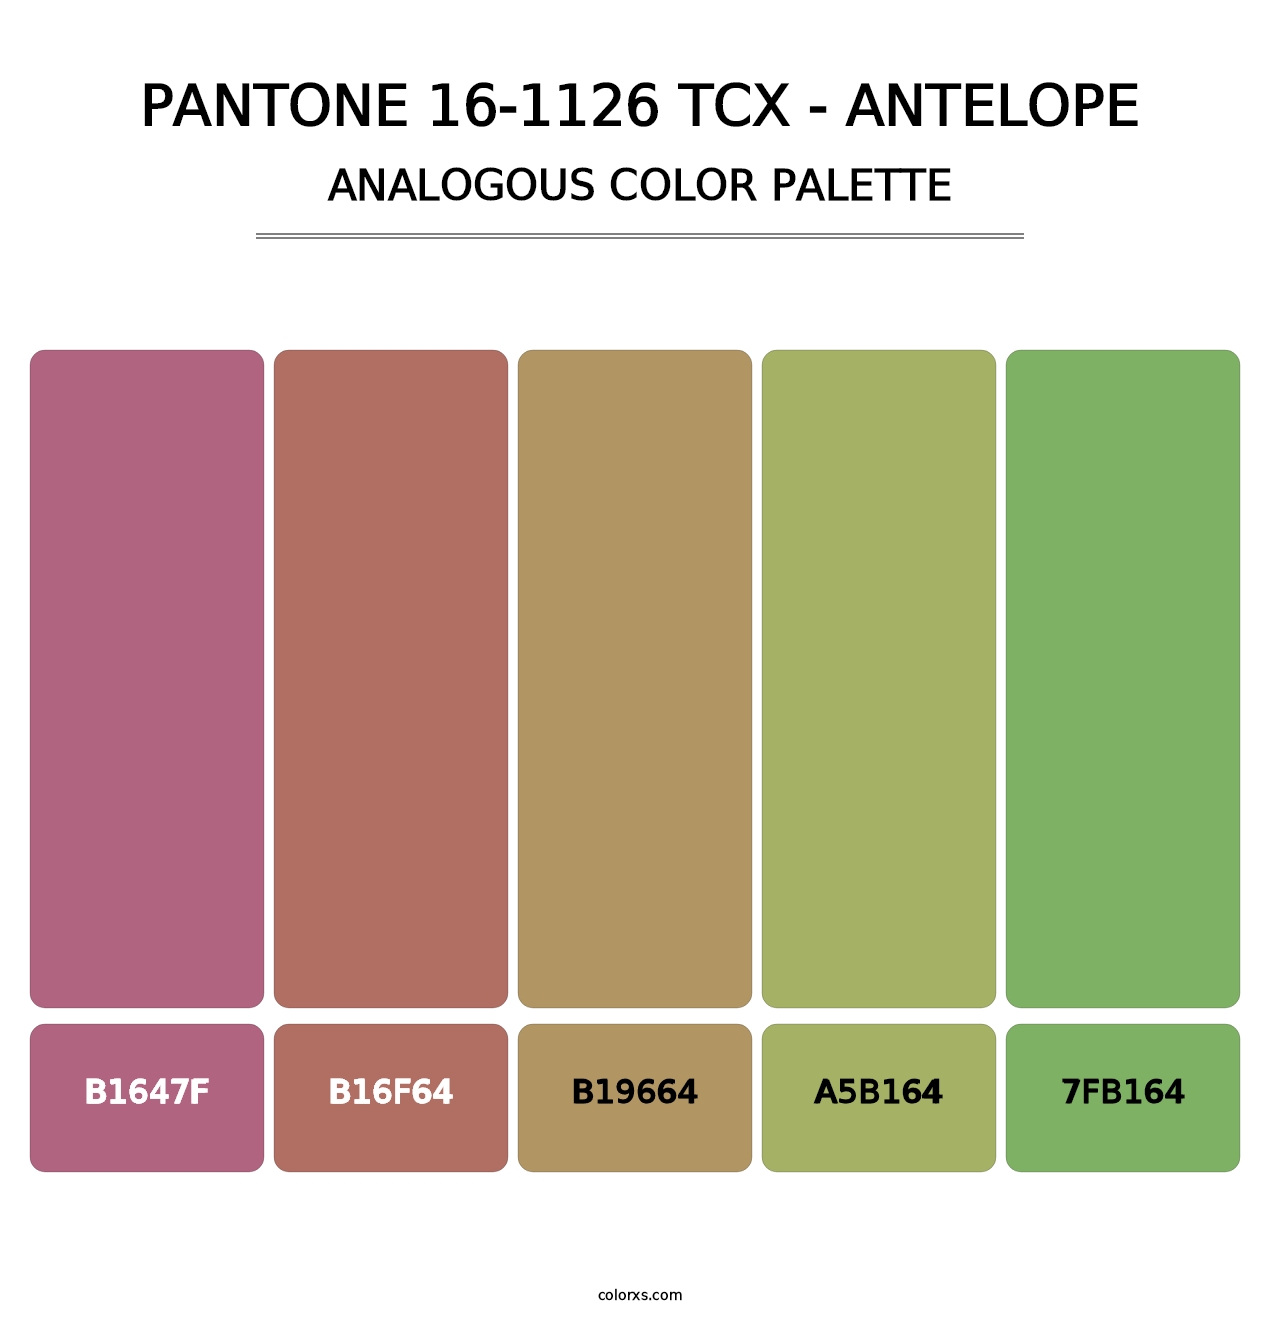 PANTONE 16-1126 TCX - Antelope - Analogous Color Palette